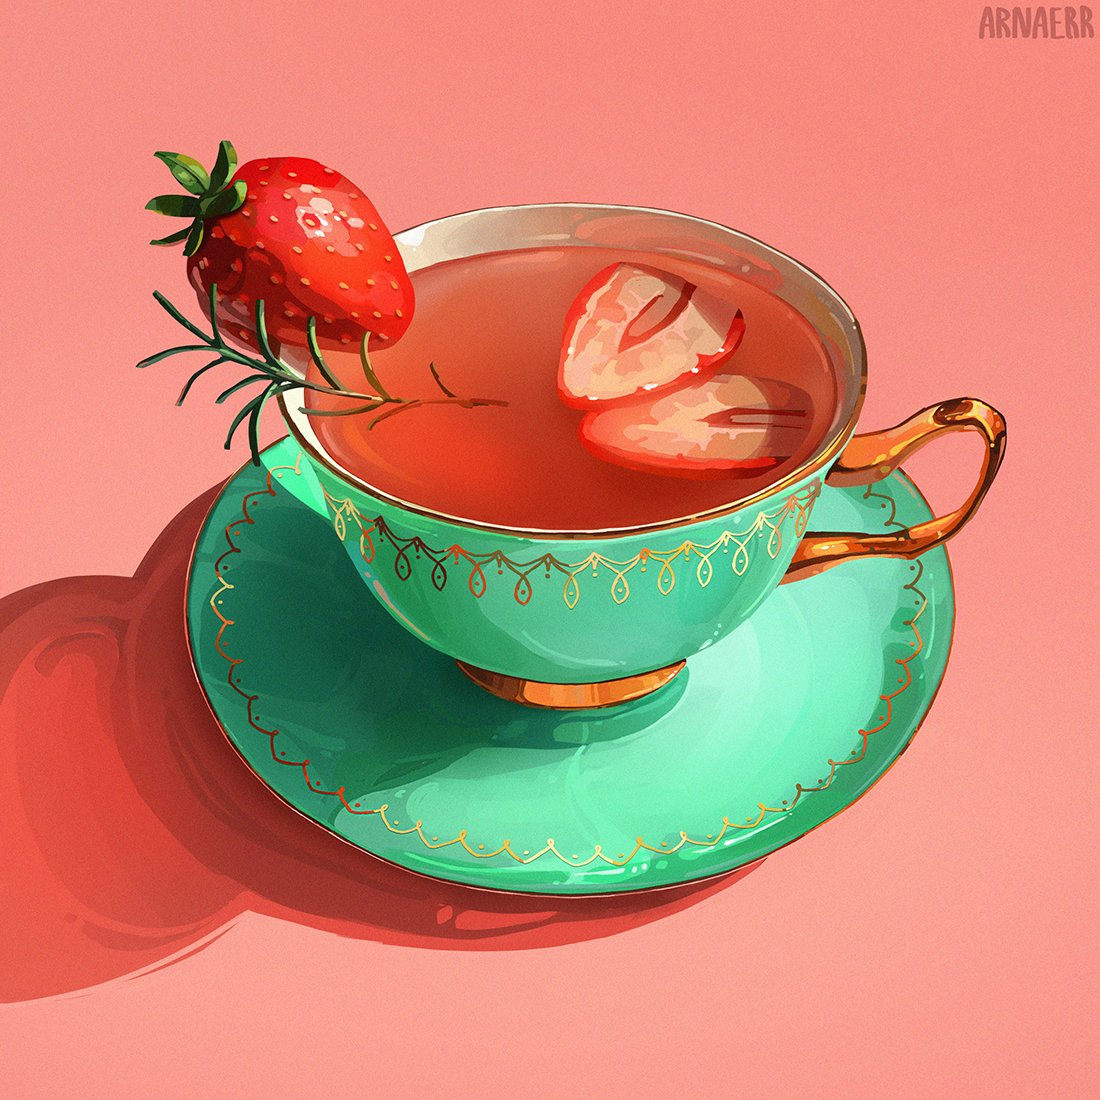 no humans food fruit cup simple background food focus teacup  illustration images